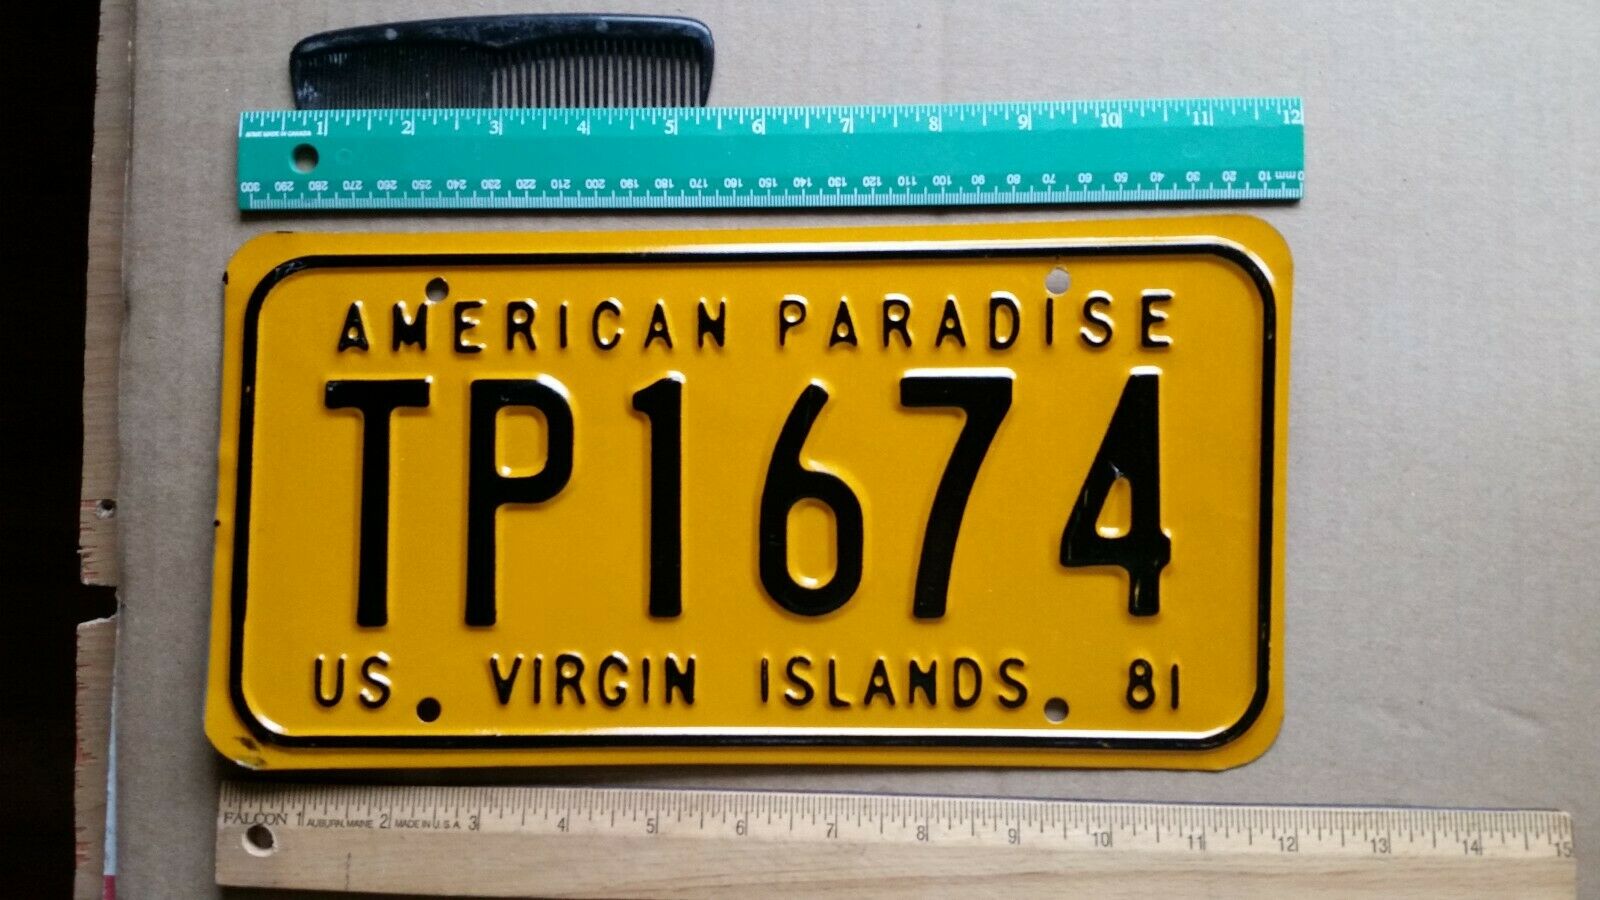 License Plate, U.s. Virgin Islands, 1981, American Paradise, Tp 1674